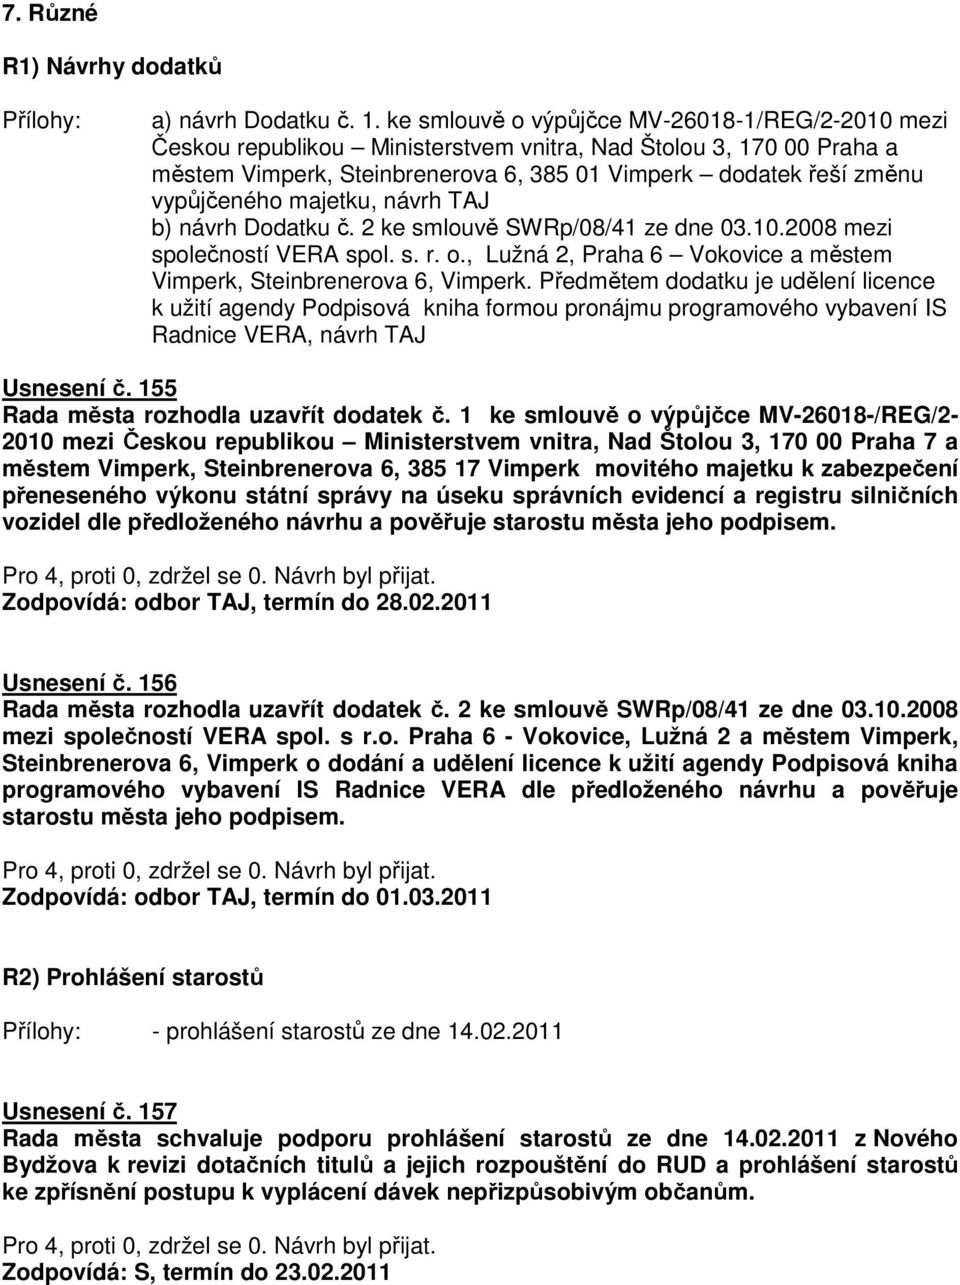 majetku, návrh TAJ b) návrh Dodatku č. 2 ke smlouvě SWRp/08/41 ze dne 03.10.2008 mezi společností VERA spol. s. r. o., Lužná 2, Praha 6 Vokovice a městem Vimperk, Steinbrenerova 6, Vimperk.